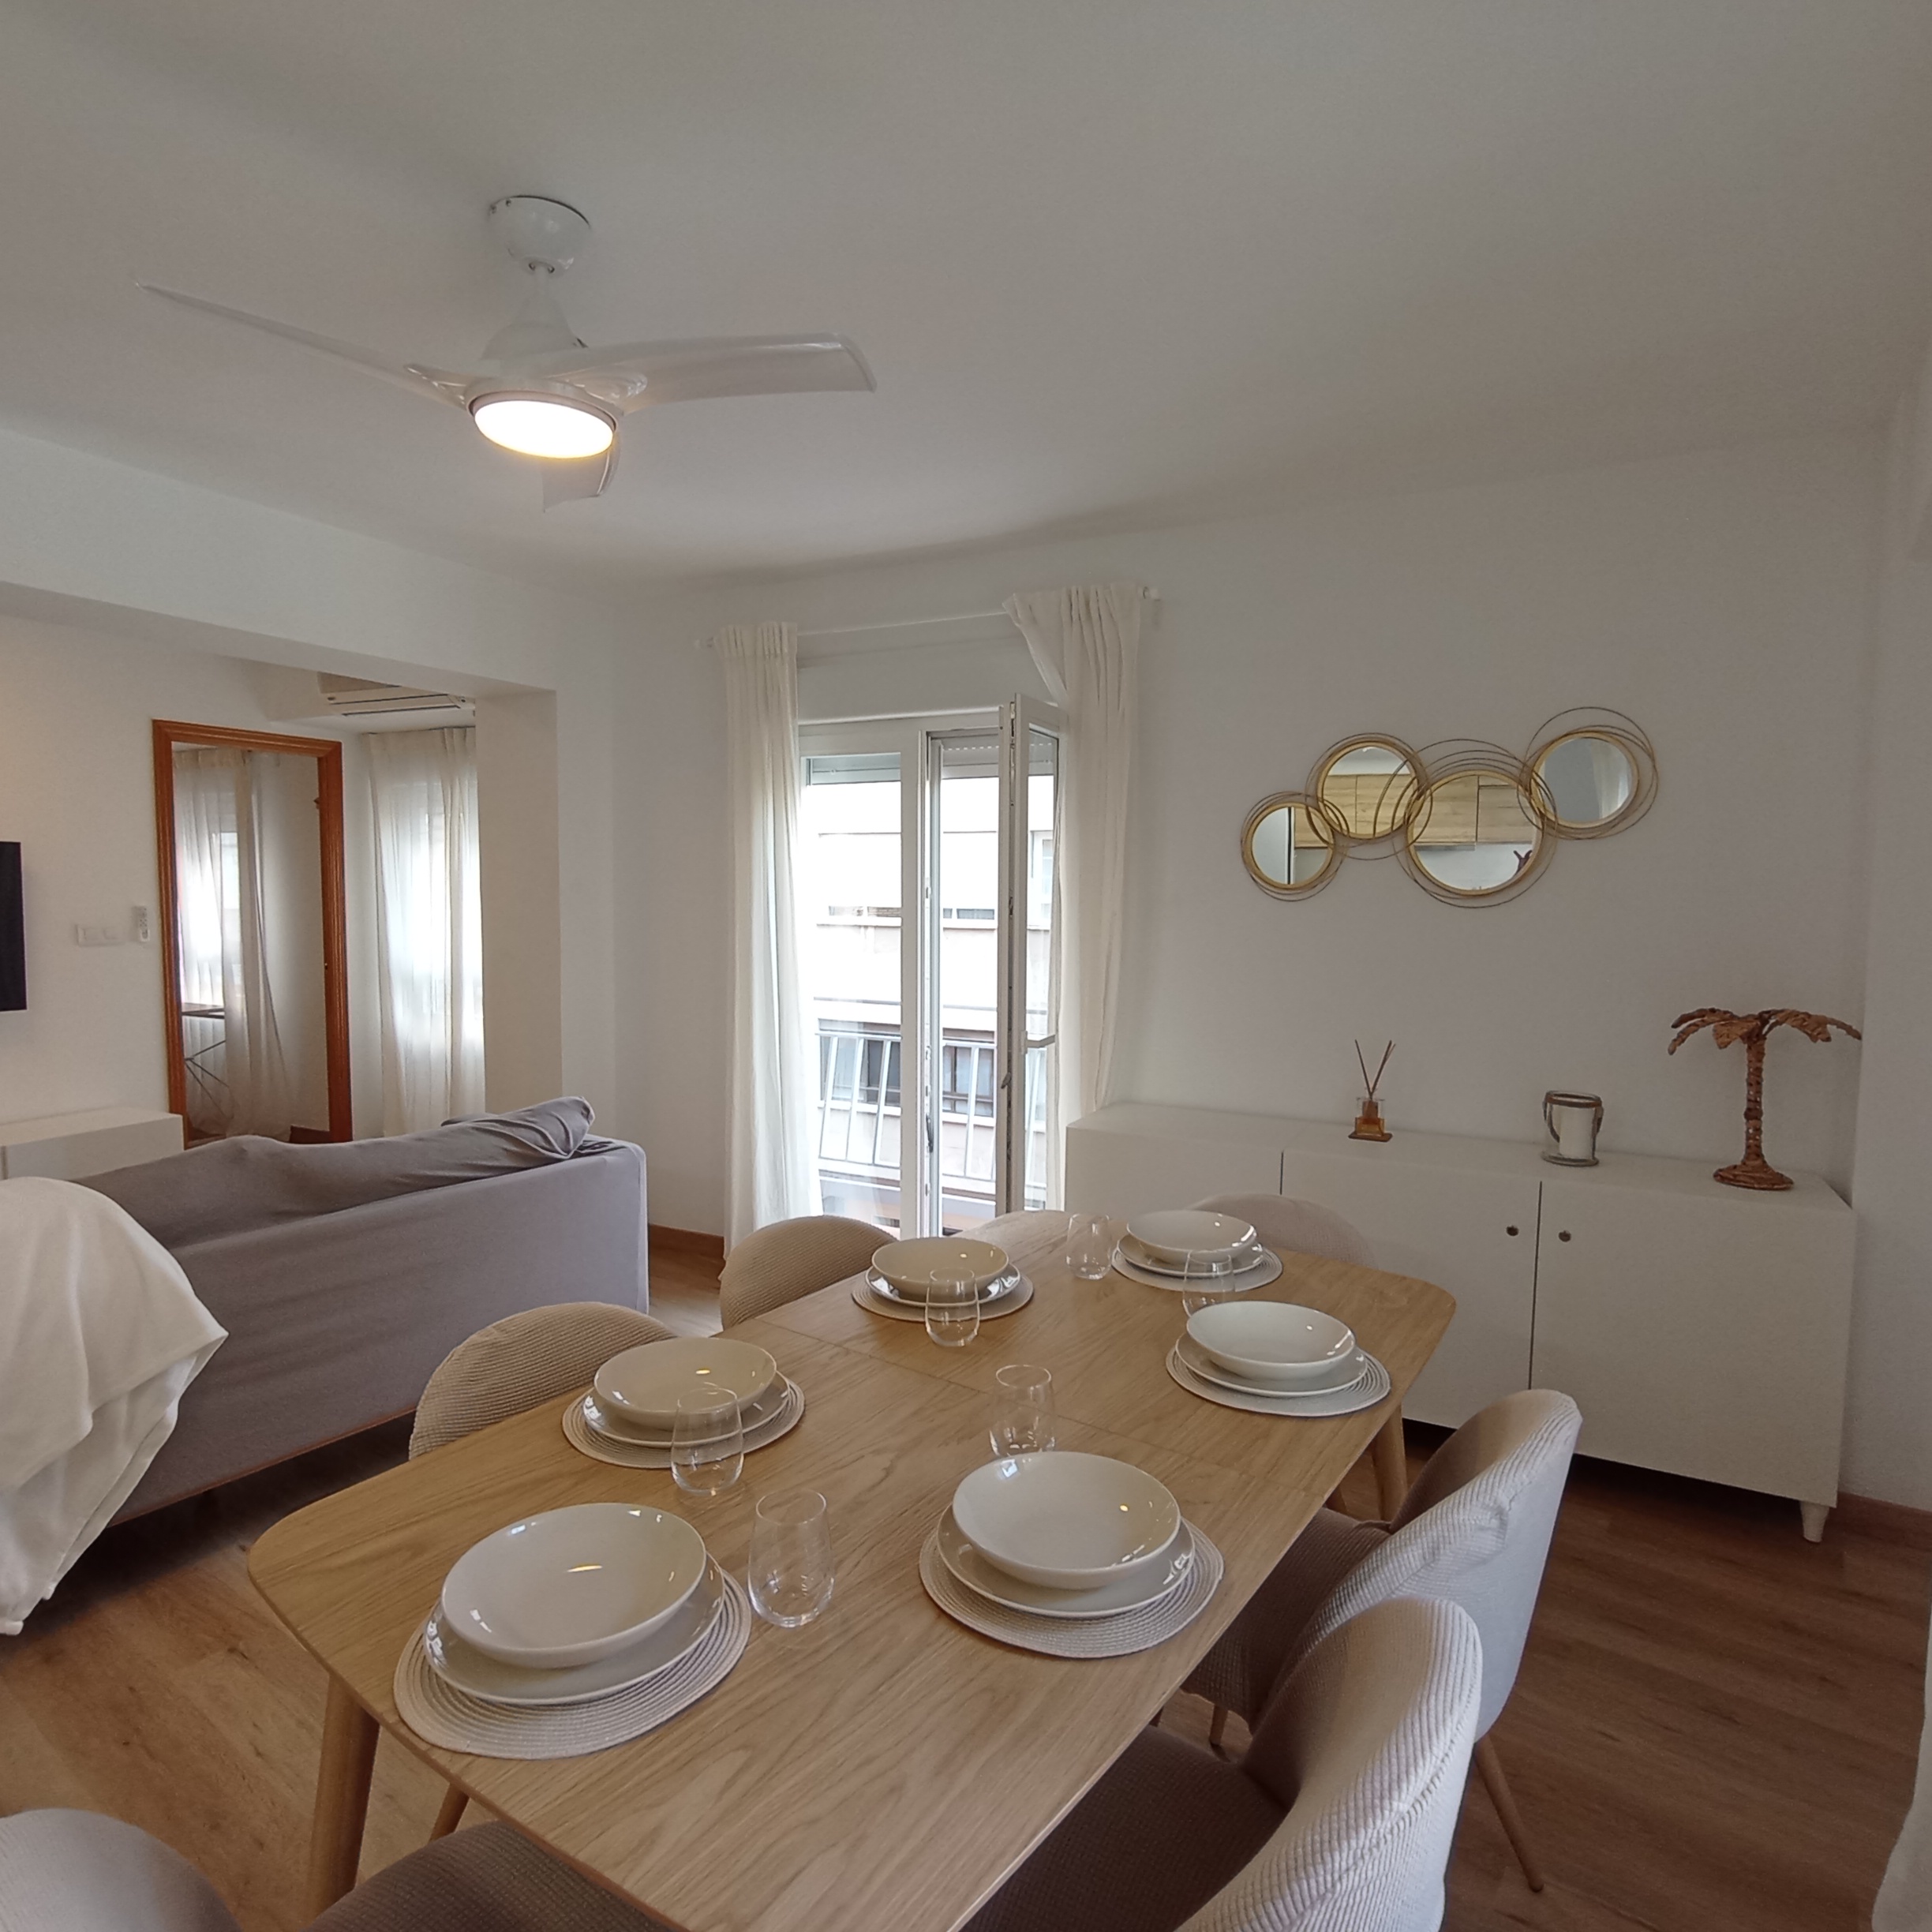 Trafalgar - 3 Bedroom apartment for rent in Valencia dining table 2